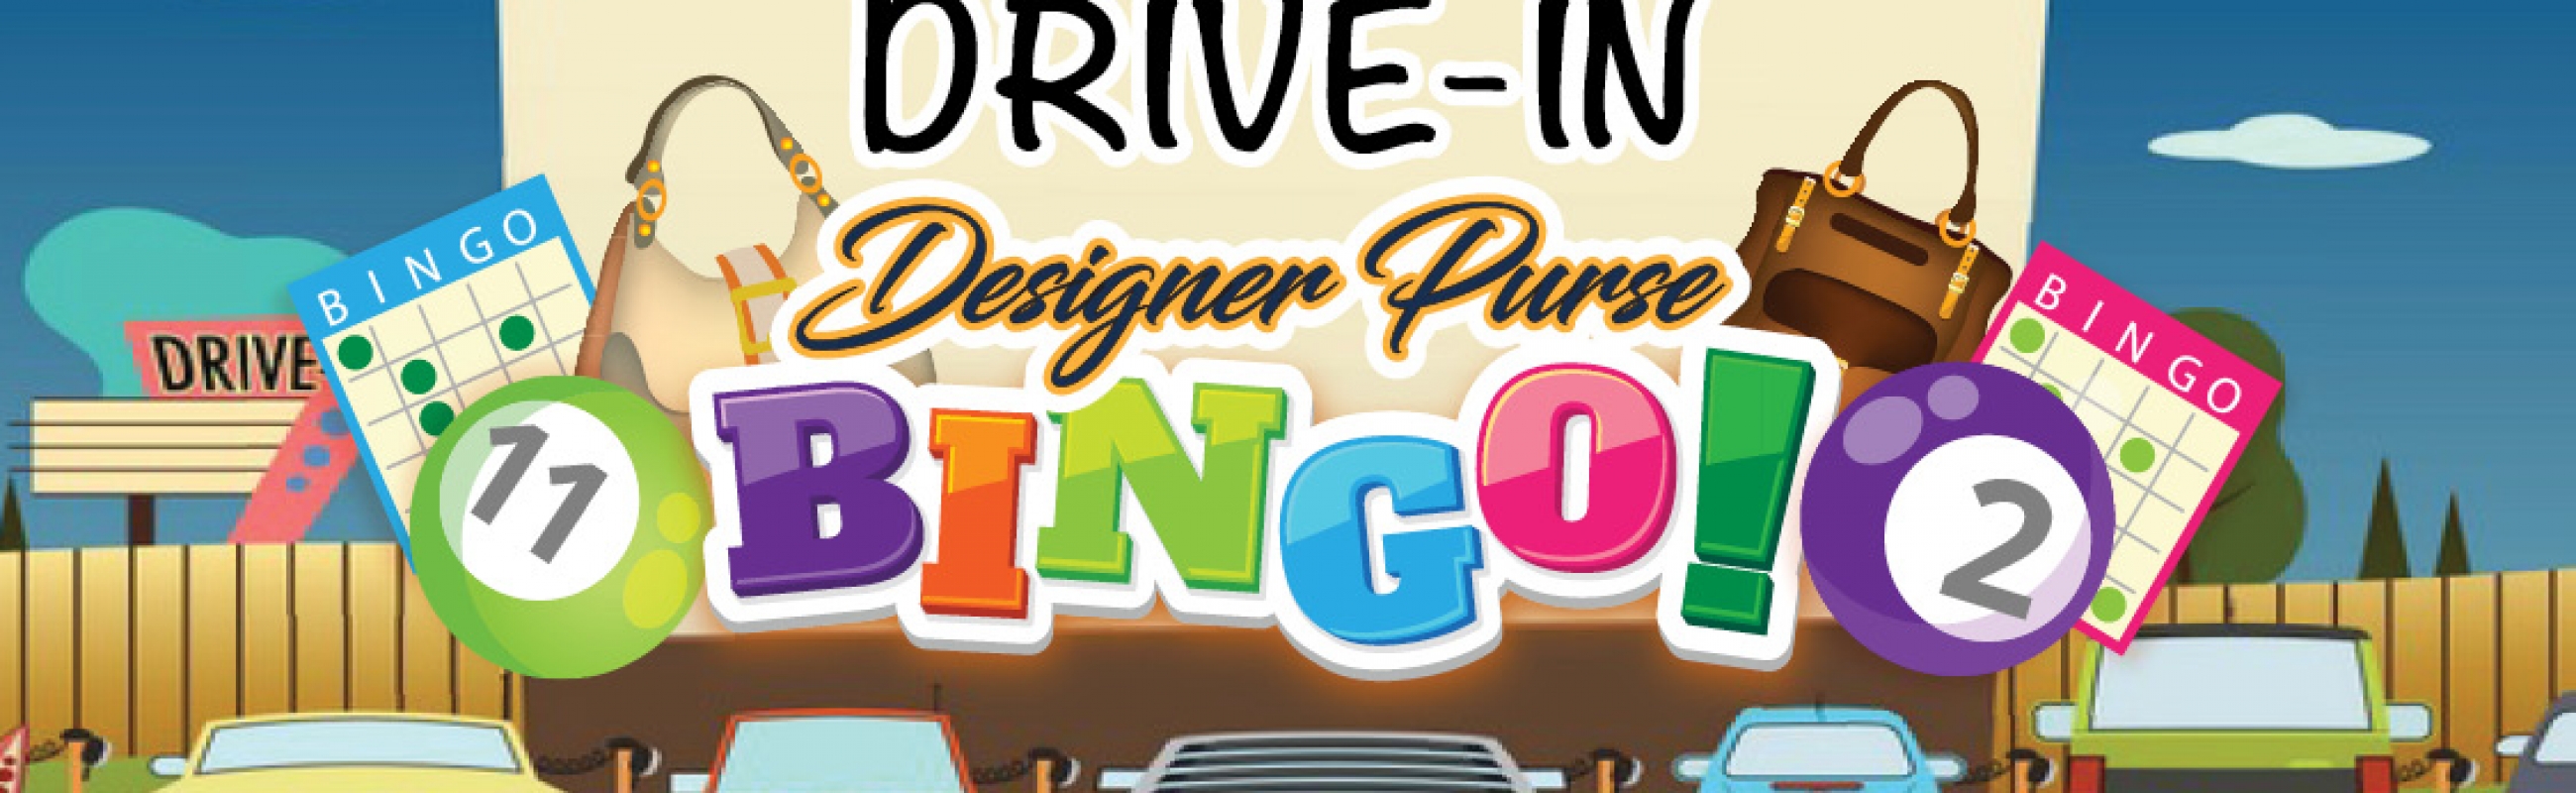 Drive-In Designer Purse Bingo